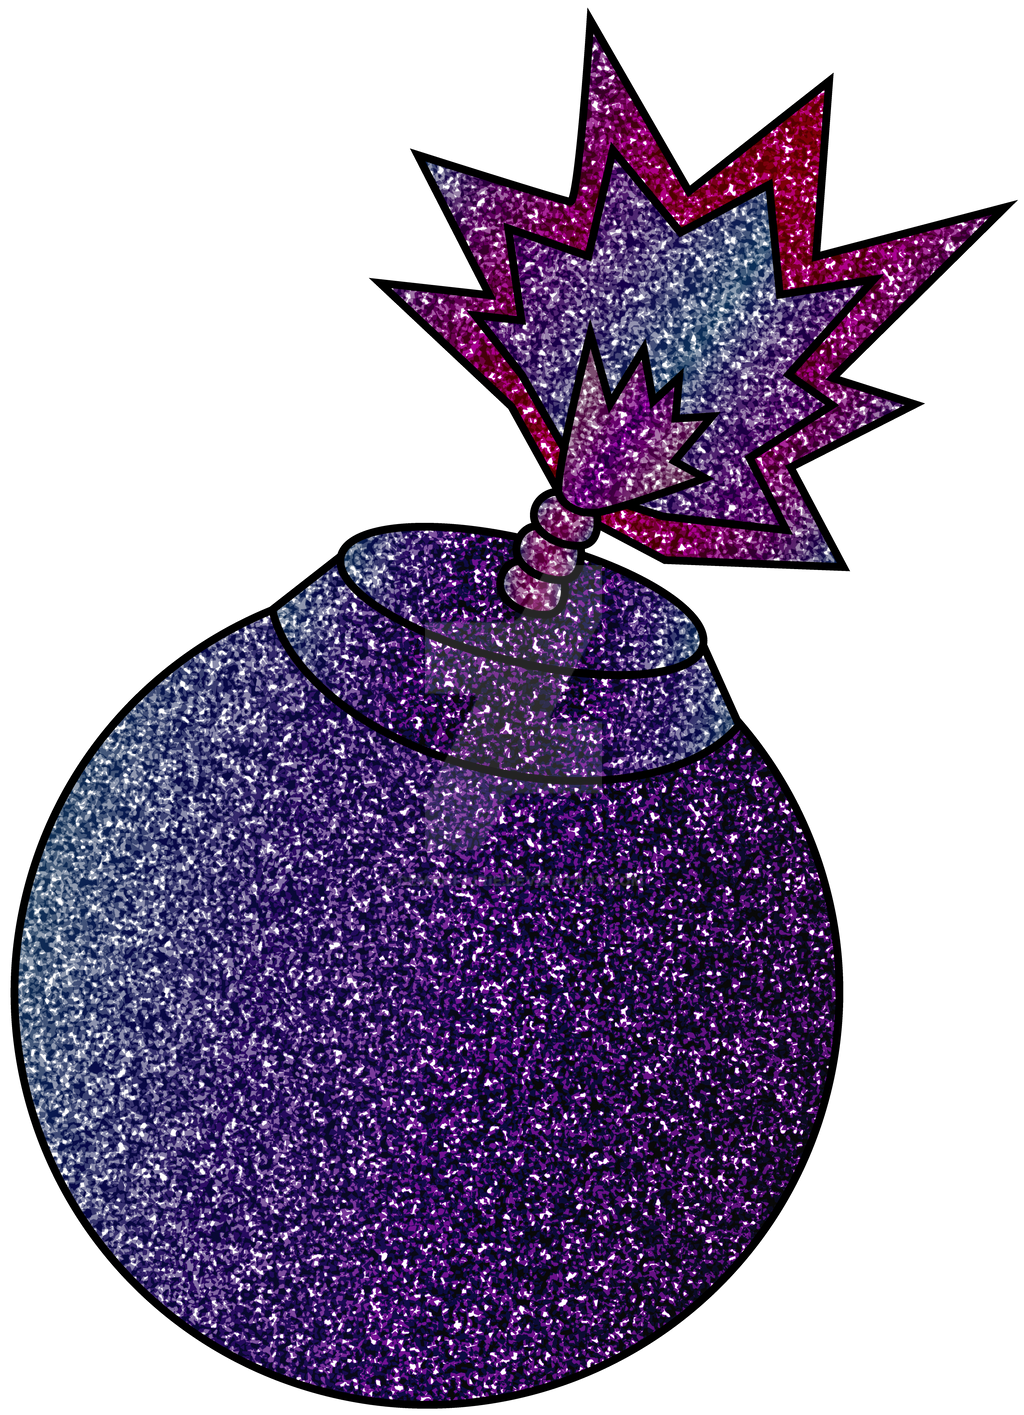 Galaxy Glitter Bomb by demonfairie on DeviantArt